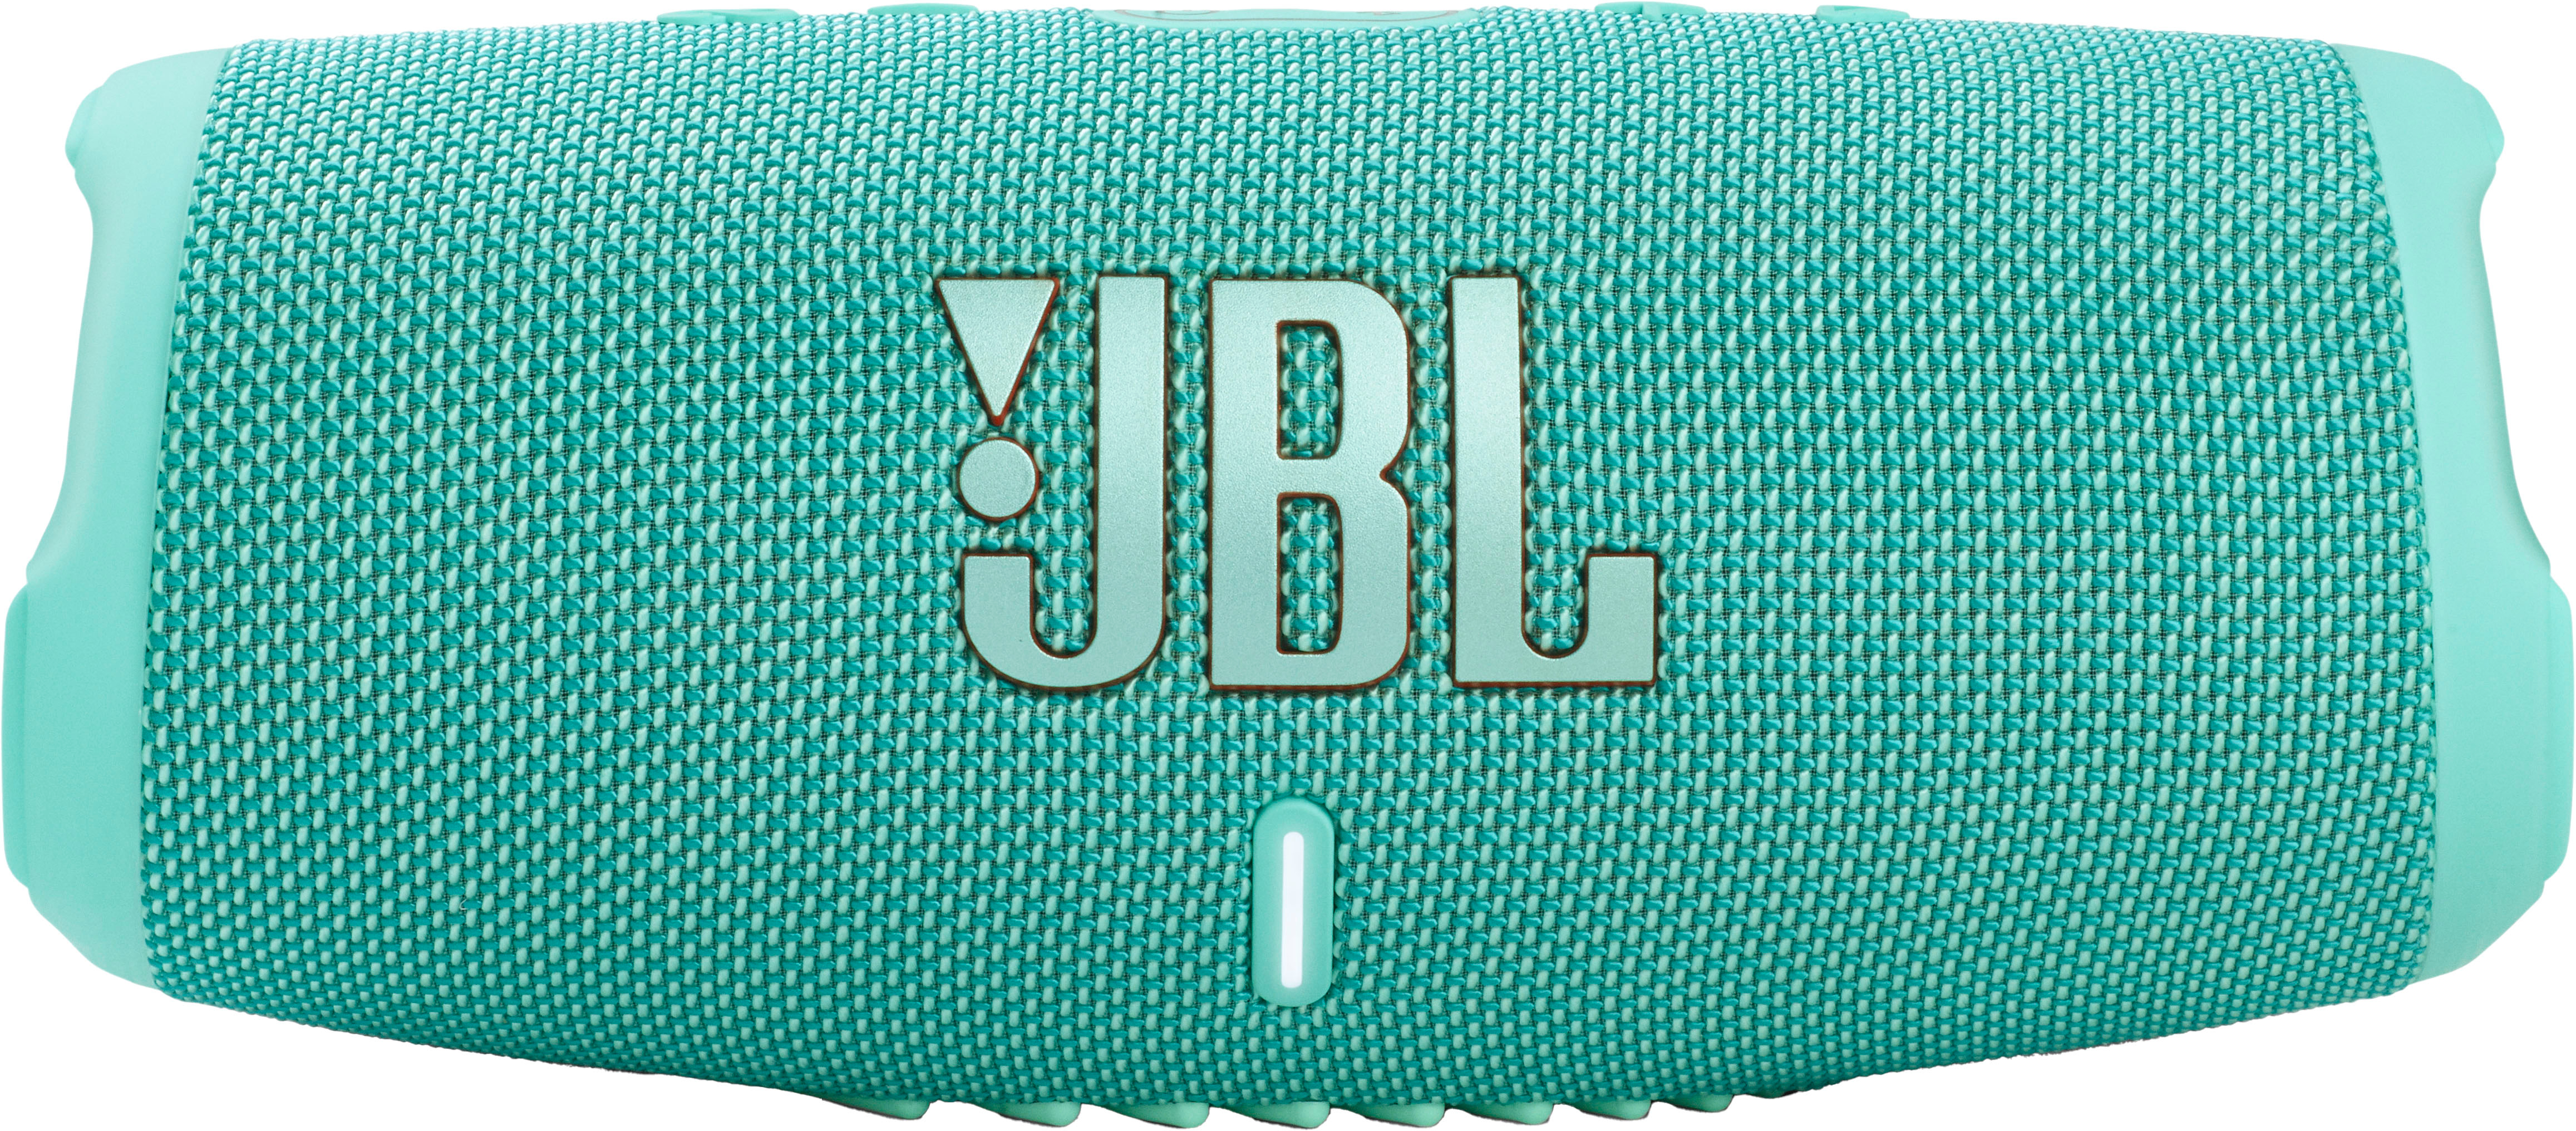 JBL Charge 4 Portable Waterproof Wireless Bluetooth Speaker - Sand 